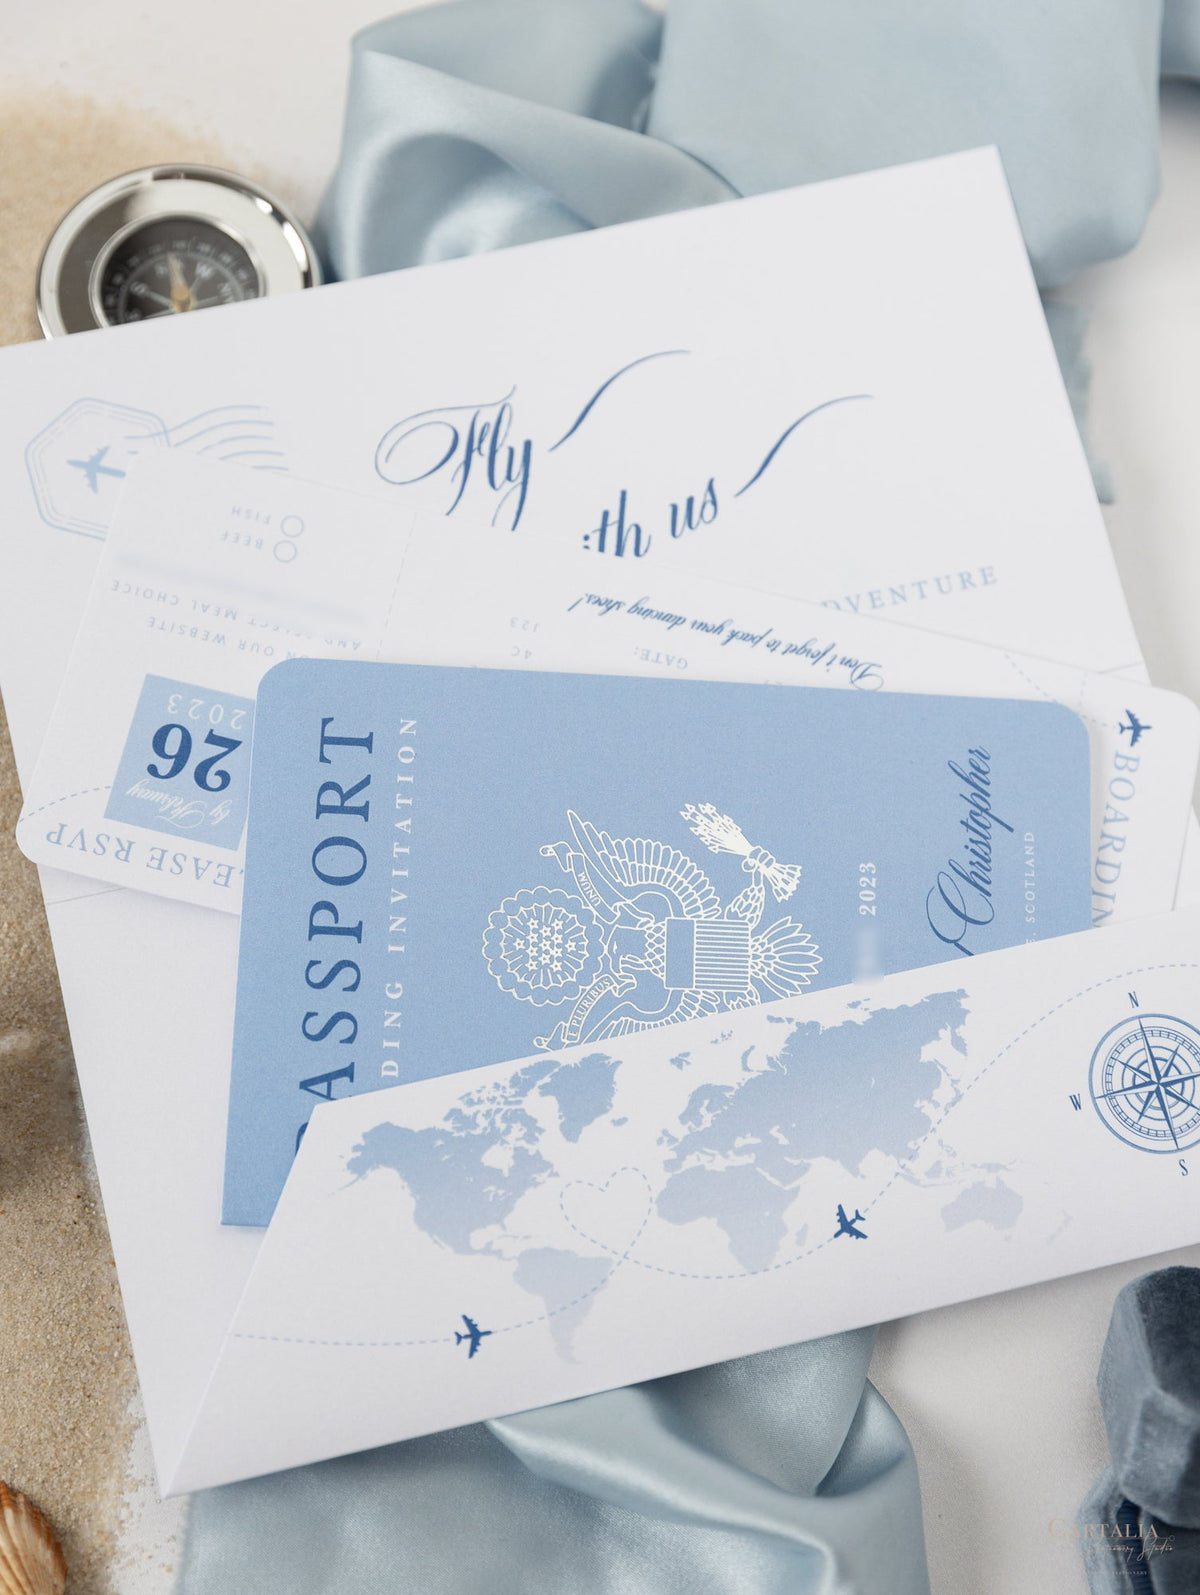 FOLDER Cartera de viaje: Invitación de pasaporte de boda azul polvoriento de lujo en bolsillo y suite de invitación de pasaporte con etiqueta de espejo plateado